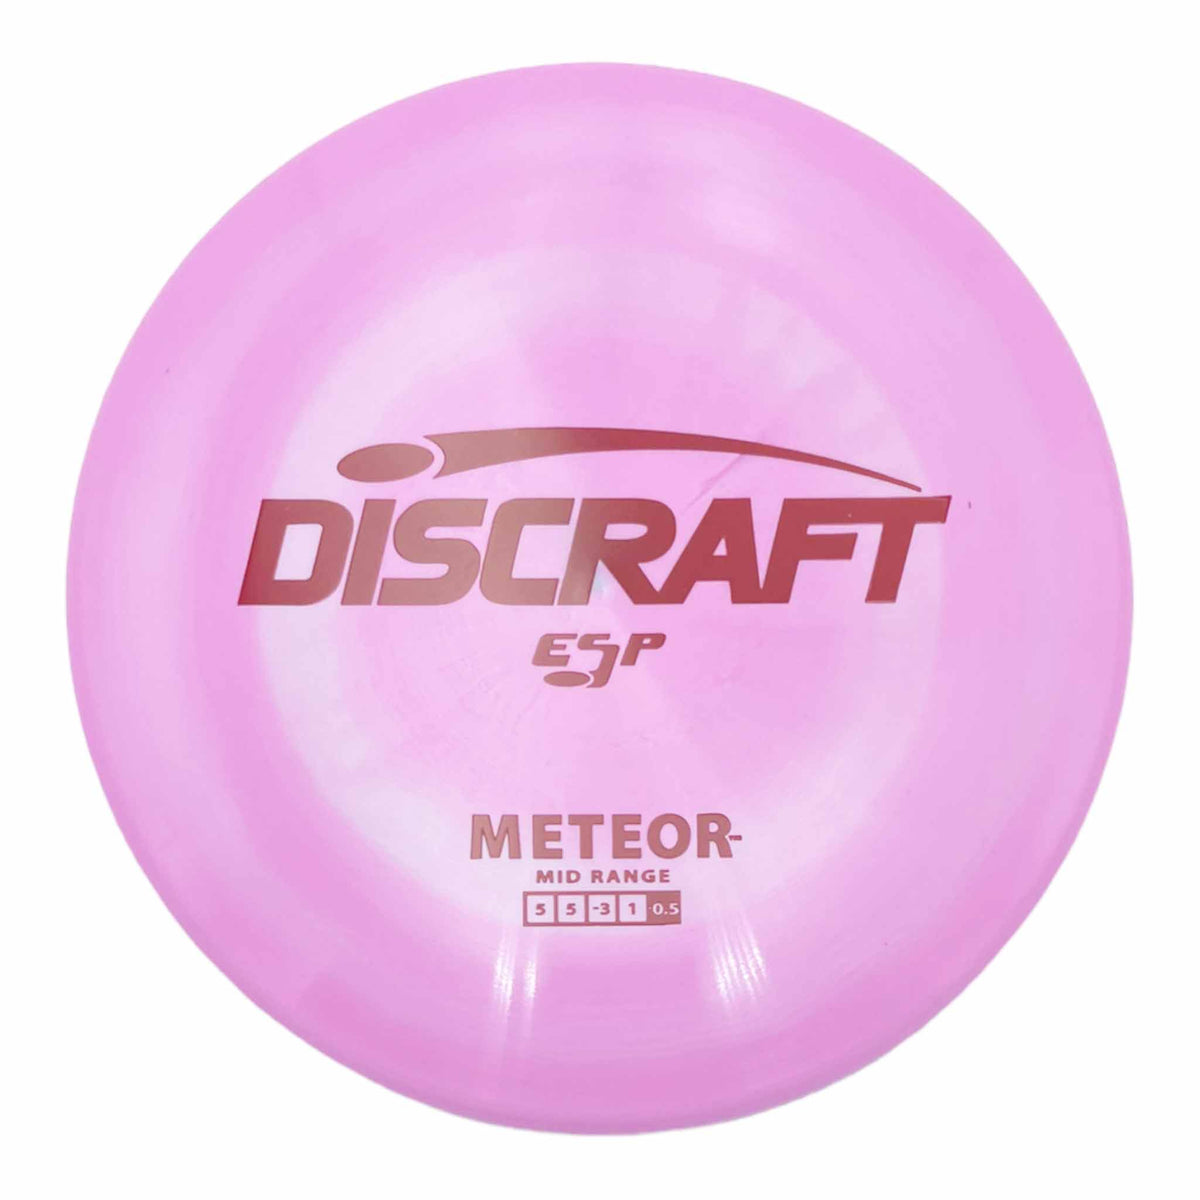 Discraft ESP Meteor midrange - Pink / Red